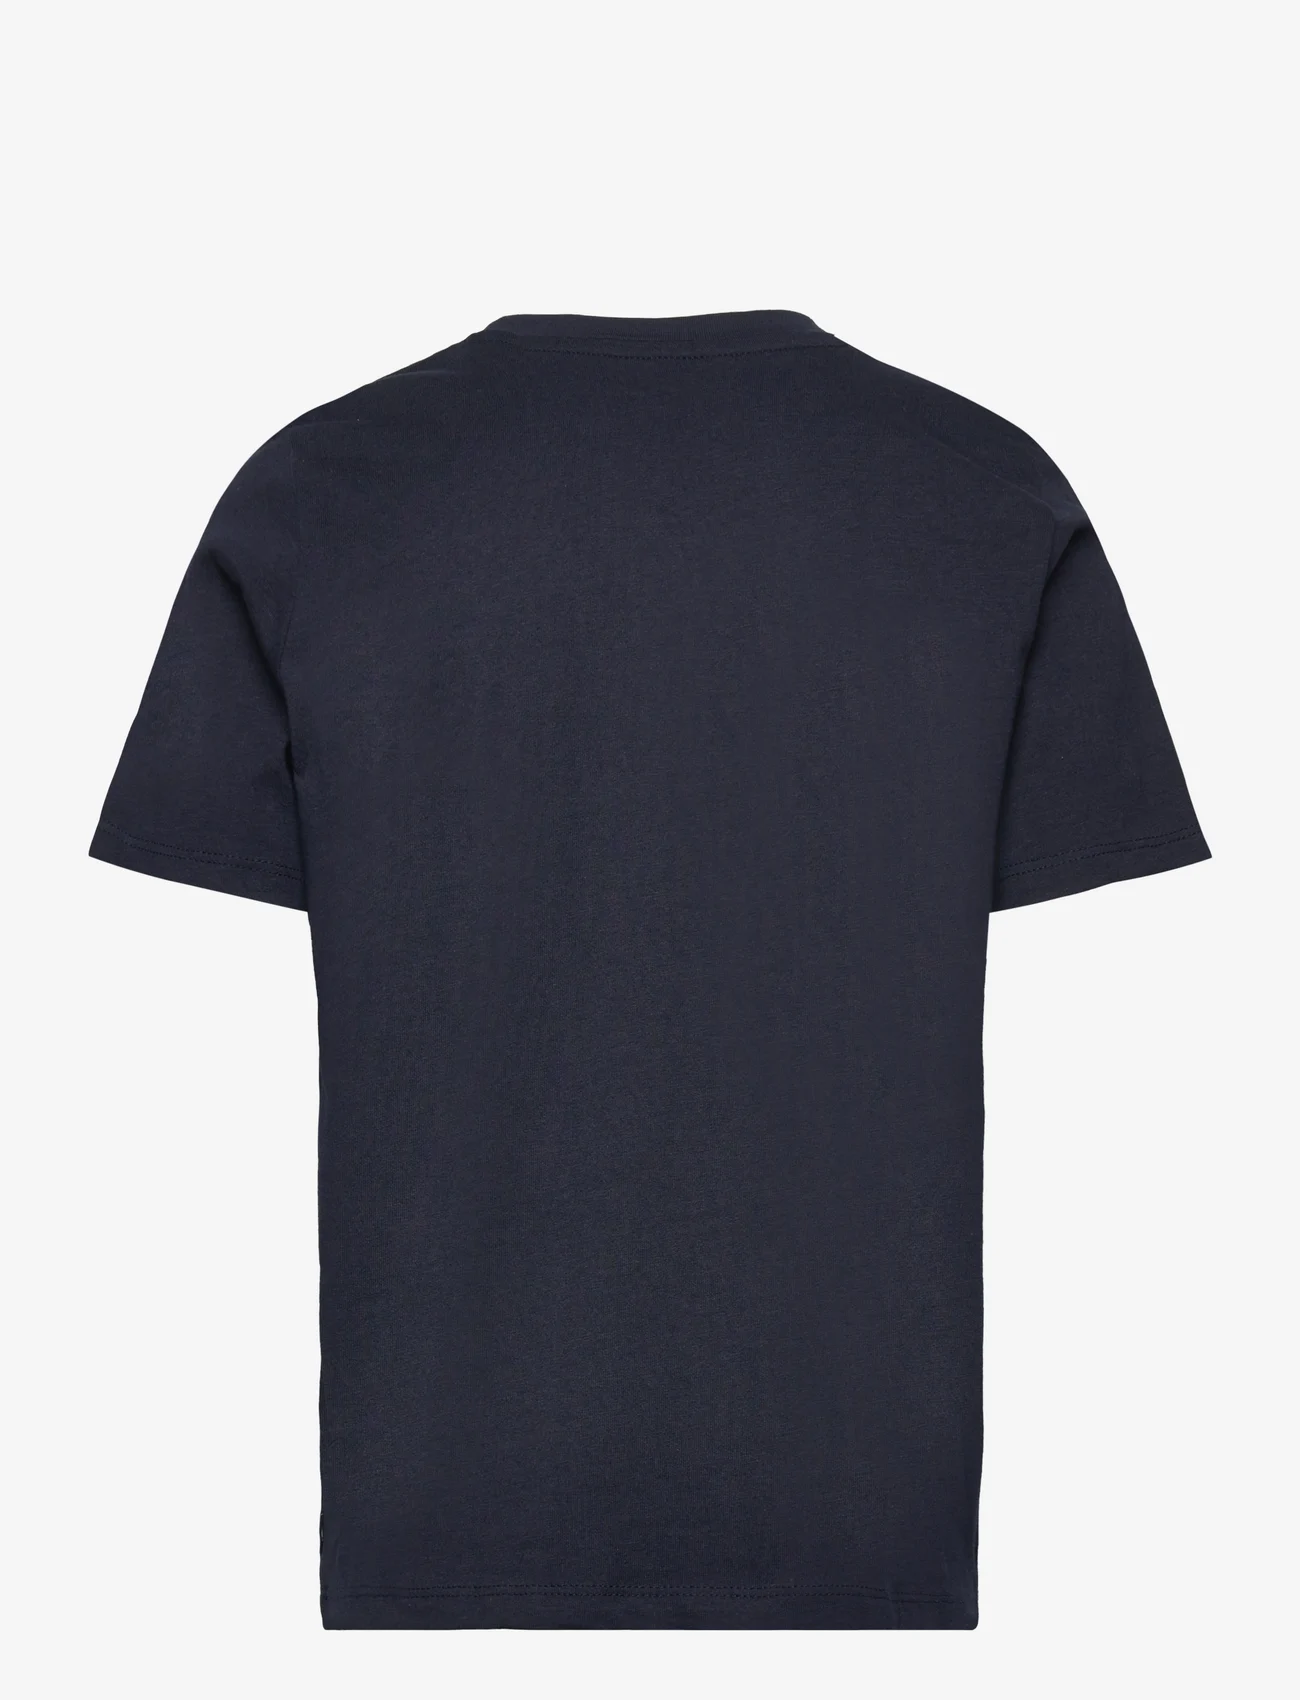 Tom Tailor - printed t-shirt - kurzärmelige - sky captain blue - 1